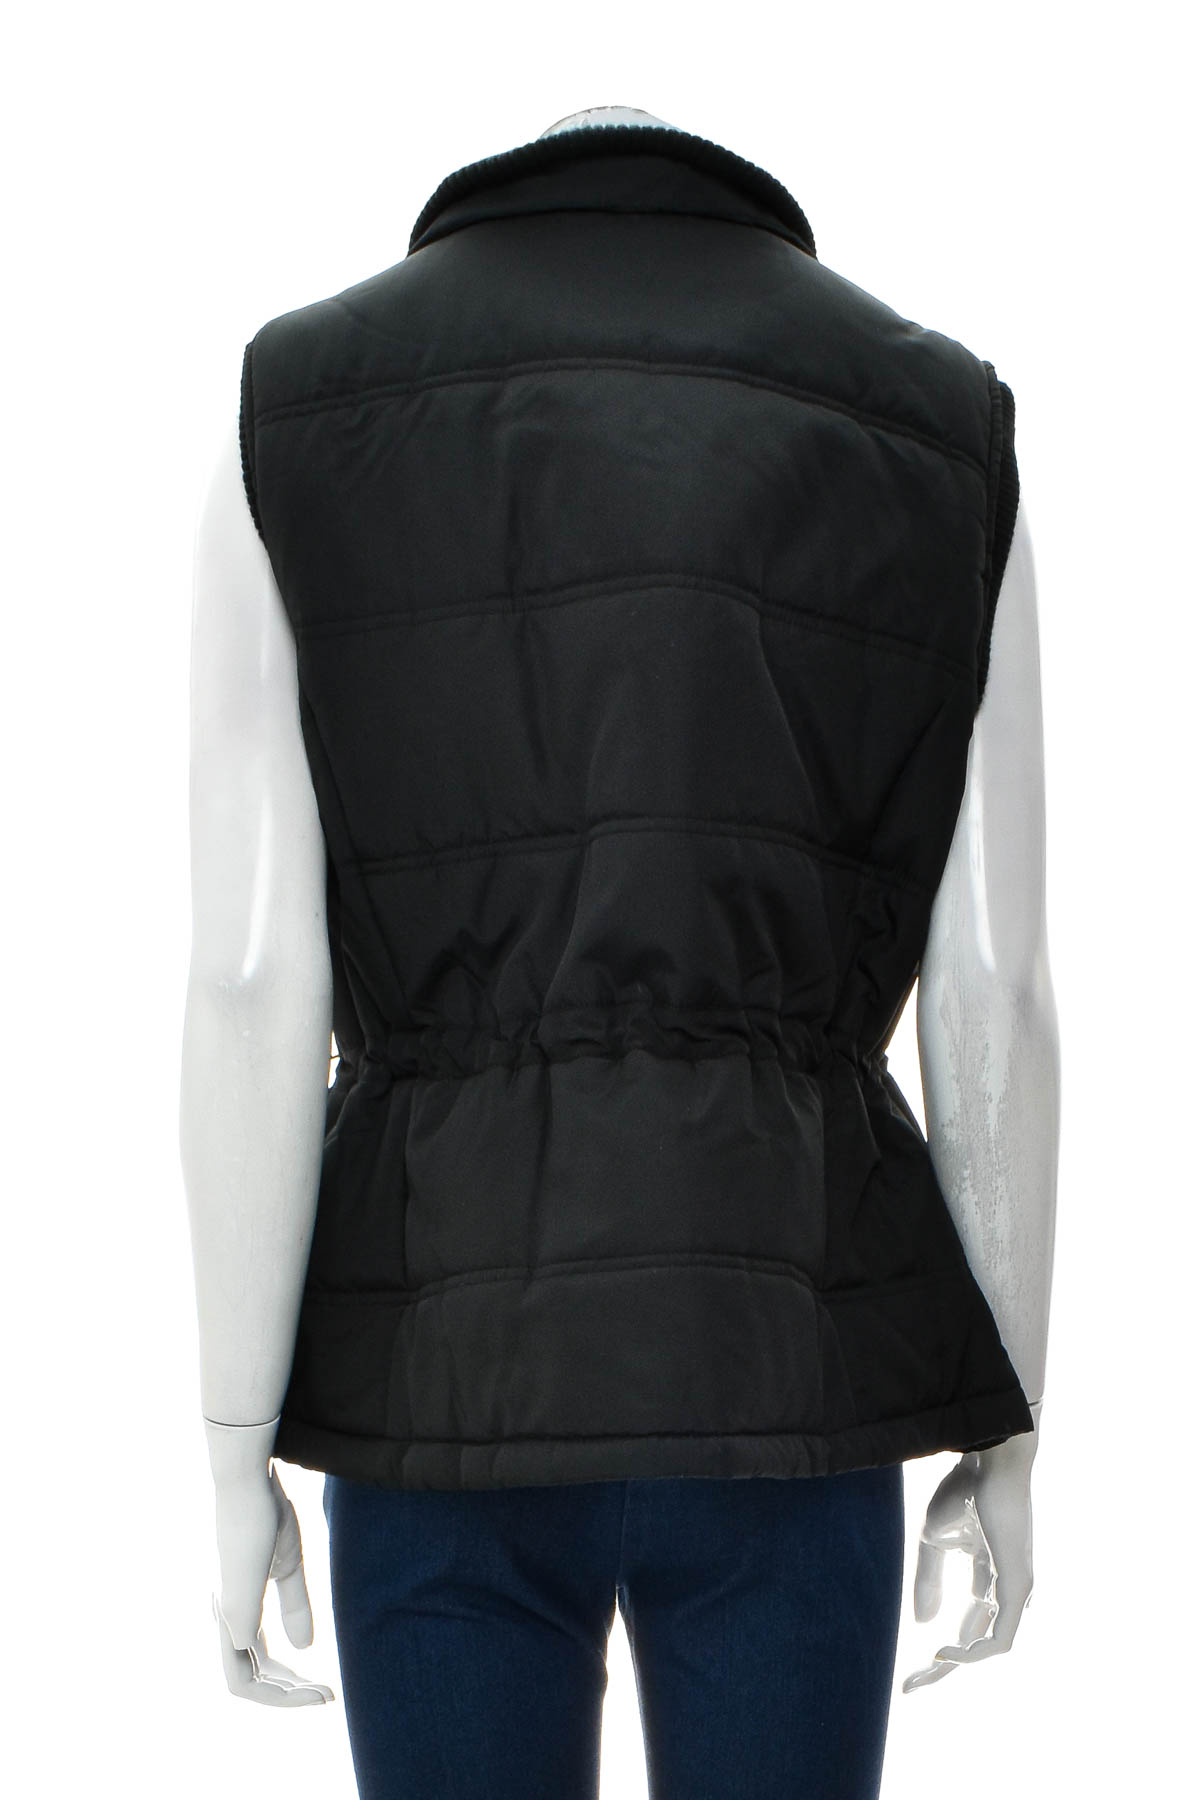 Women's vest - Giada - 1